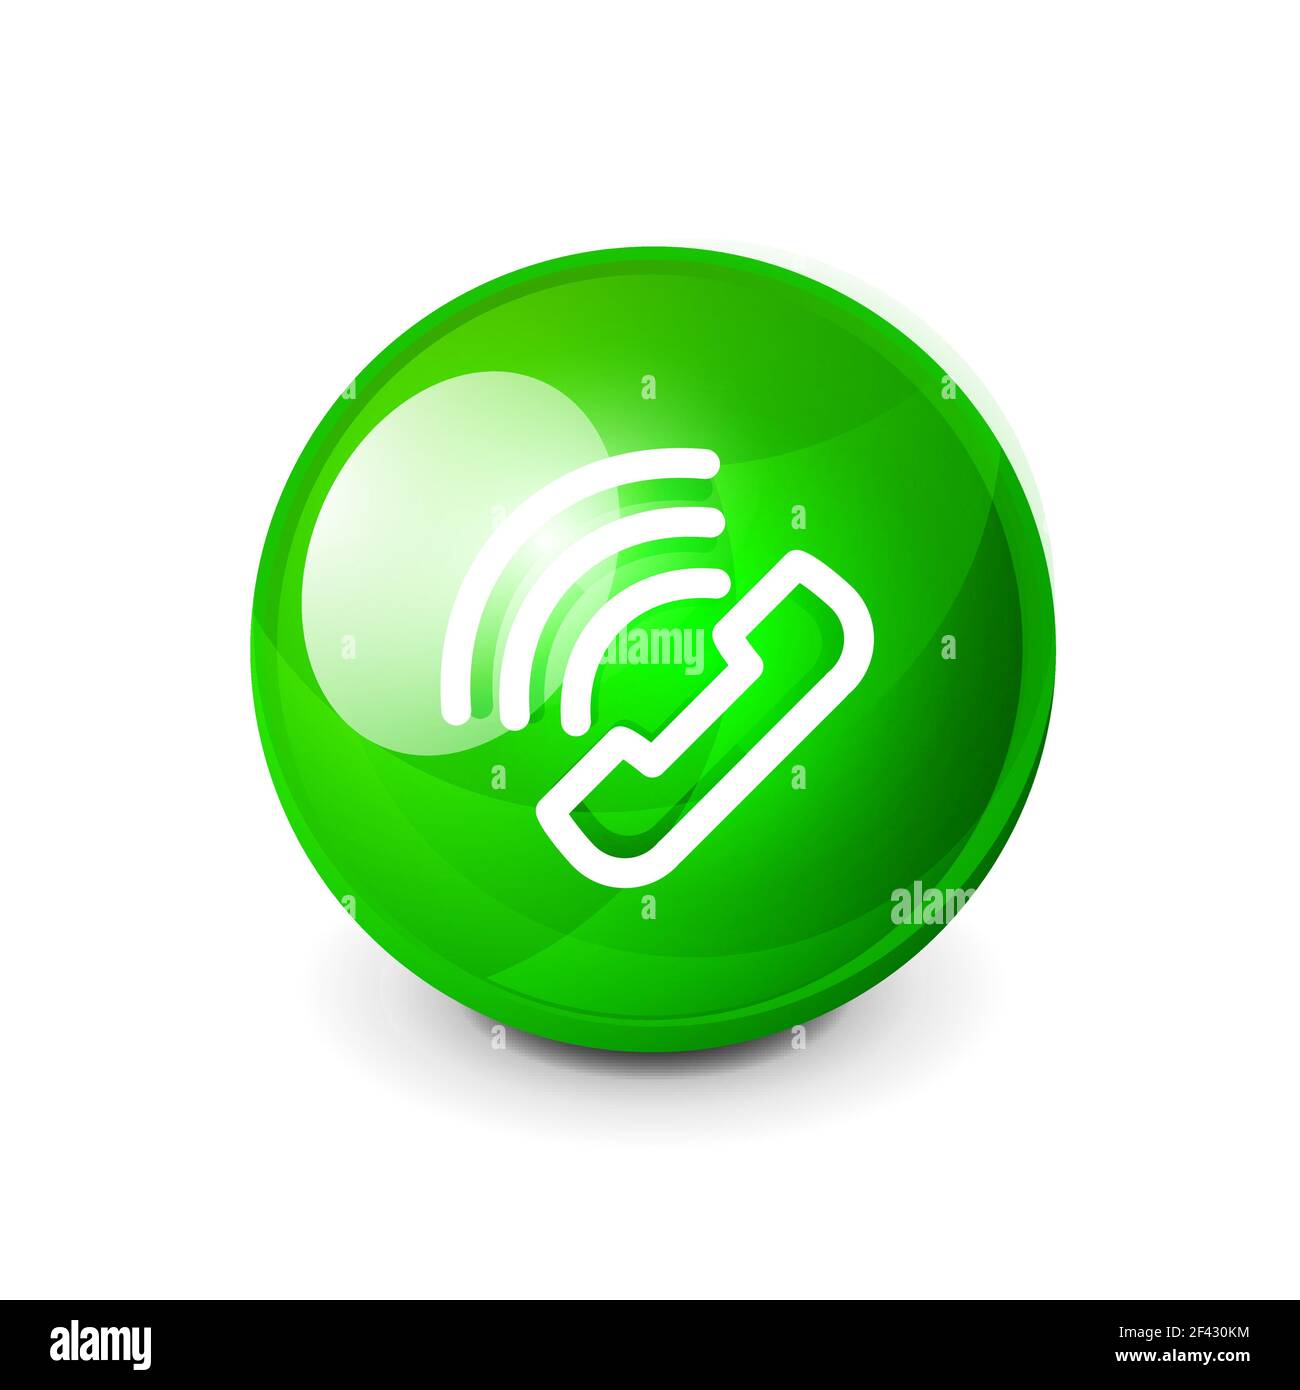 Phone support call center button. Phone support call center button, web icon design Stock Vector